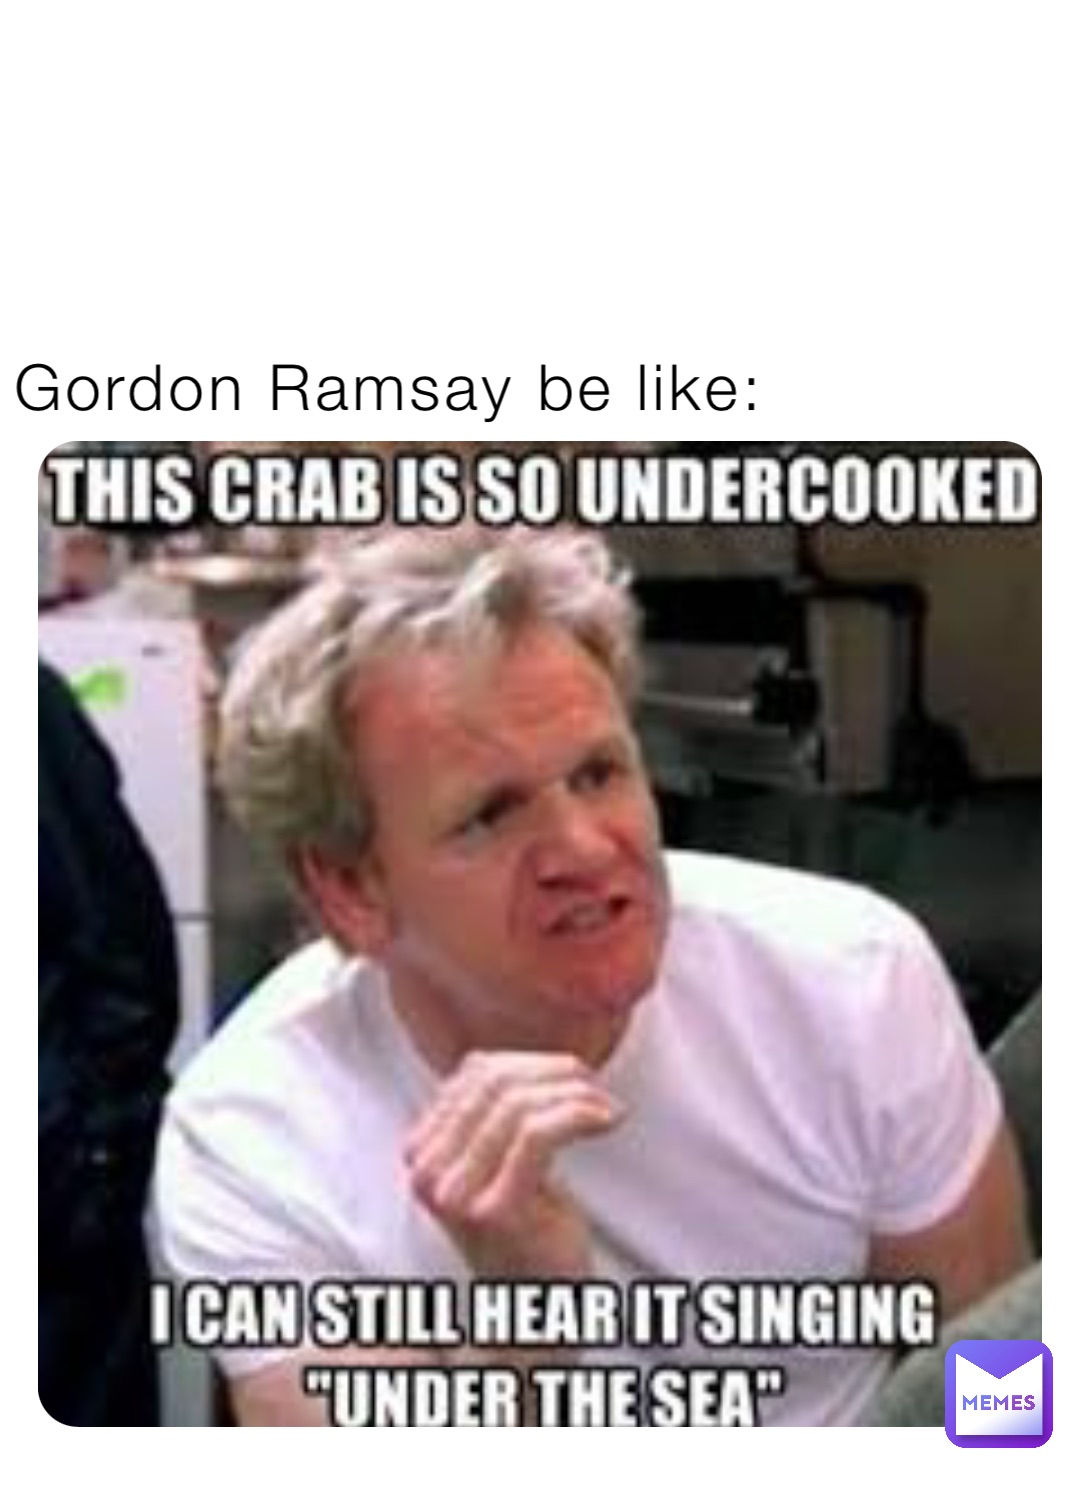 gordon ramsay meme undercooked